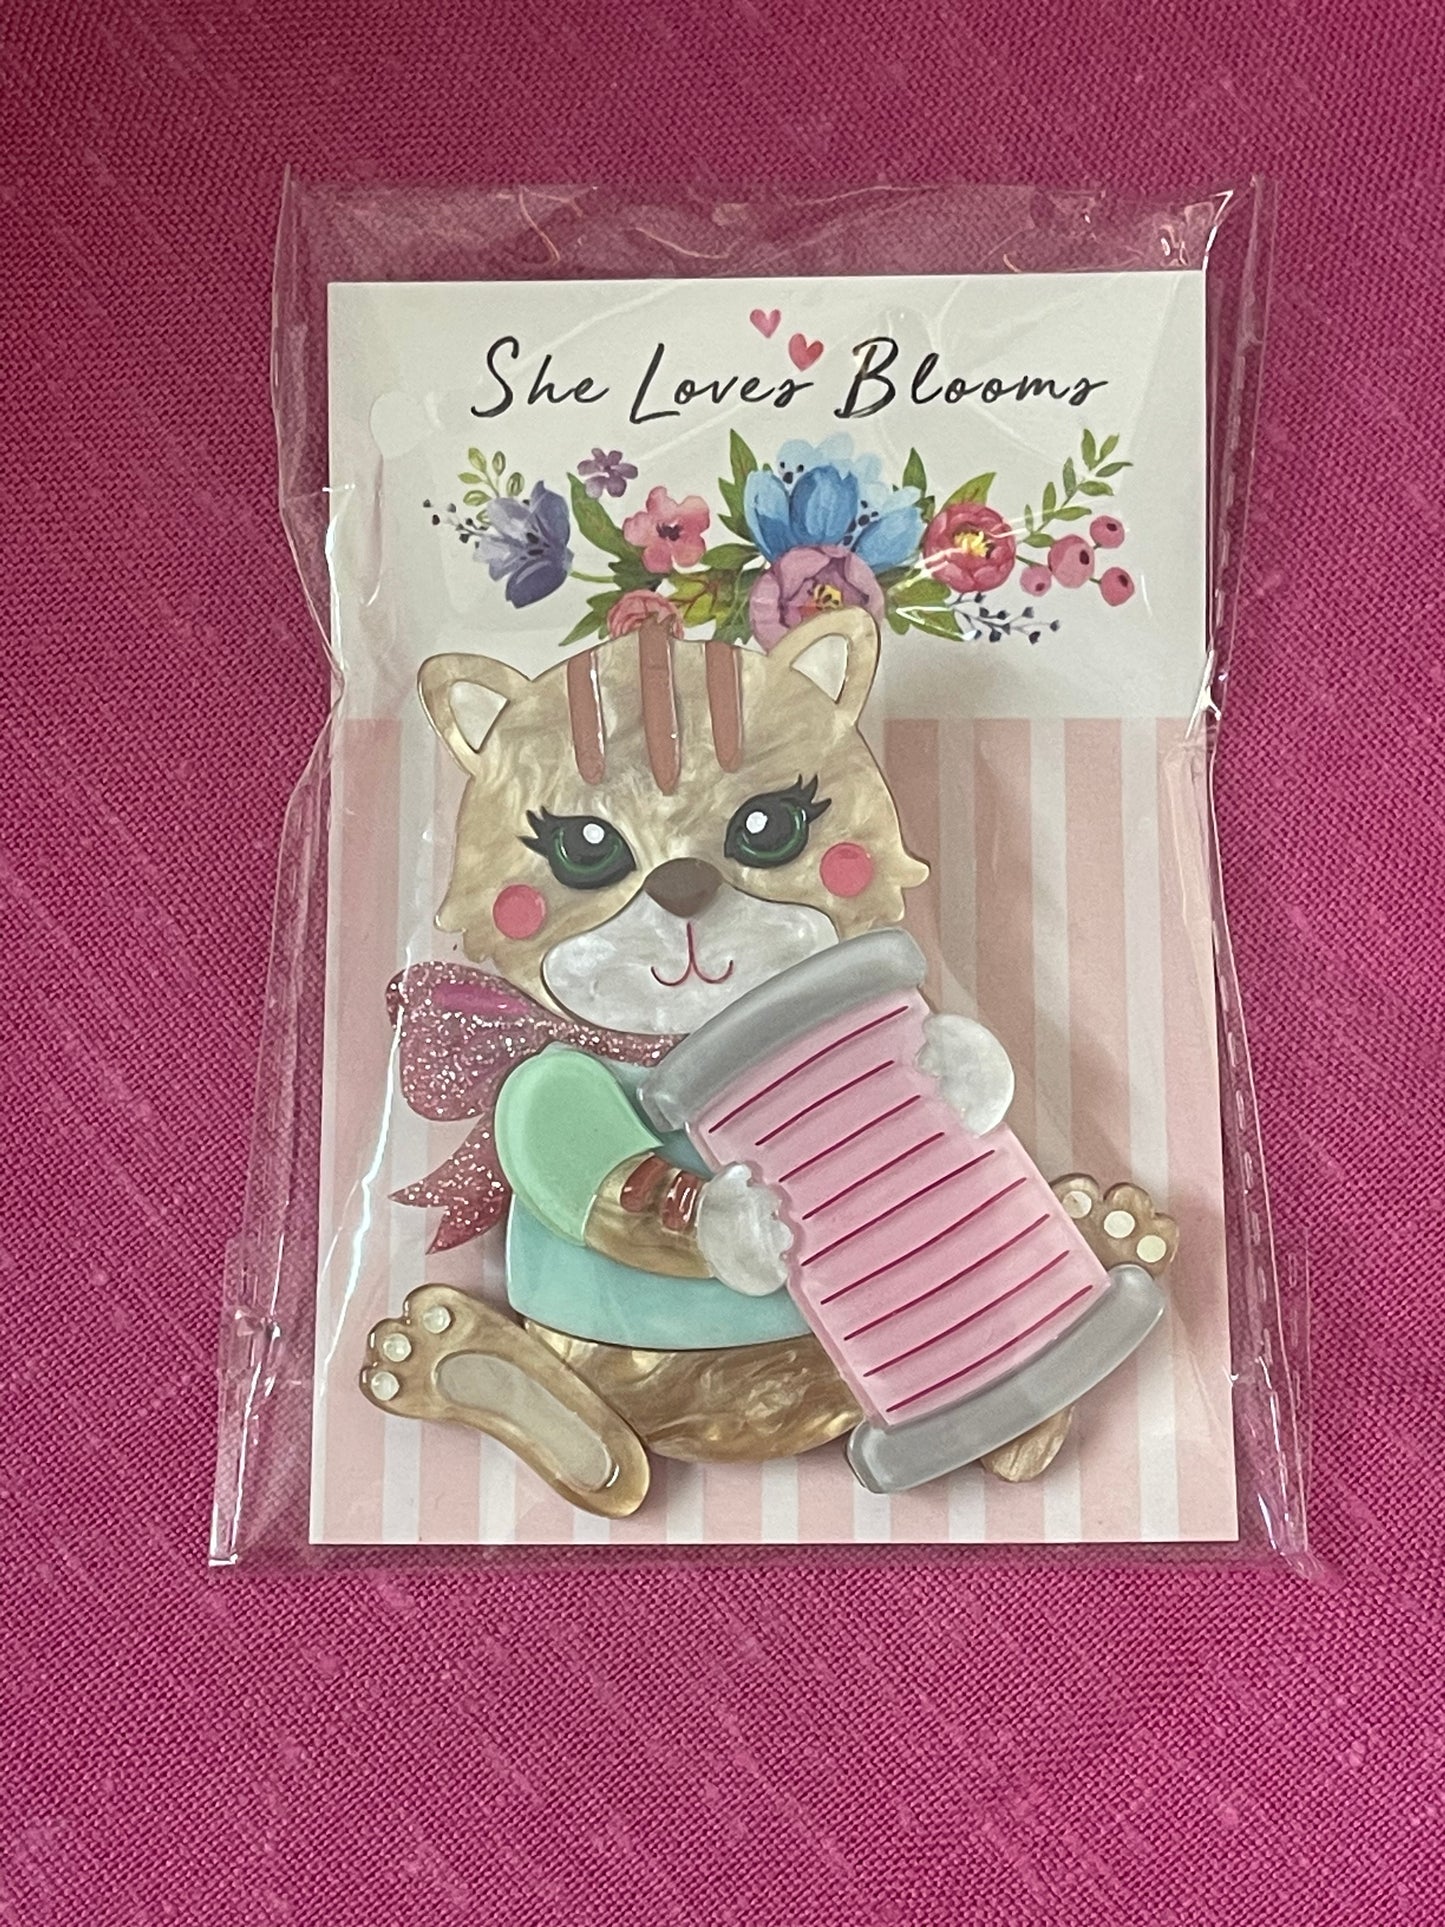 Sewing Kitten brooch by She Loves Blooms